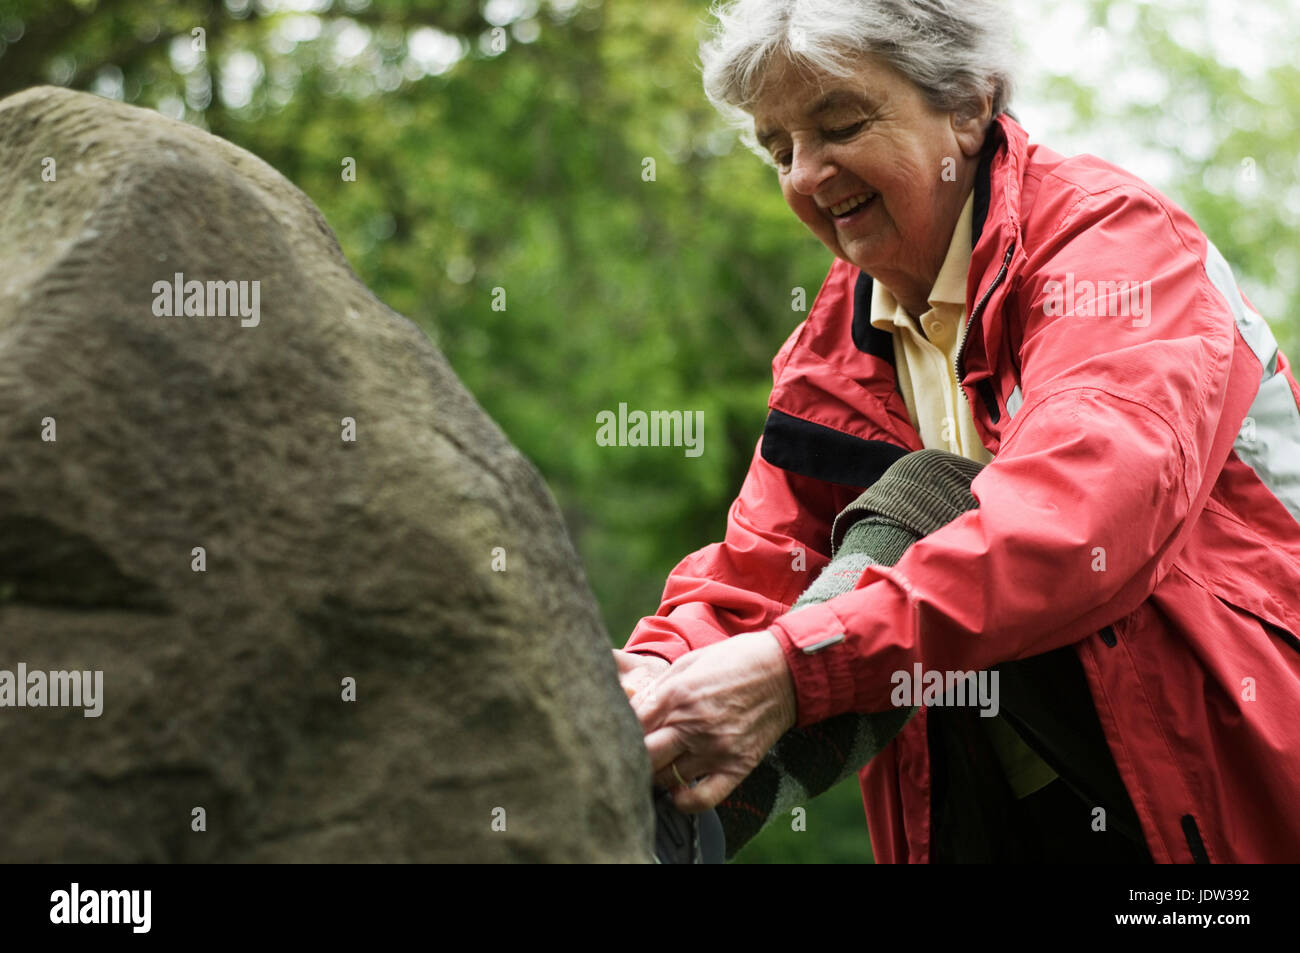 Older woman tying shoe on rock in park Stock Photo